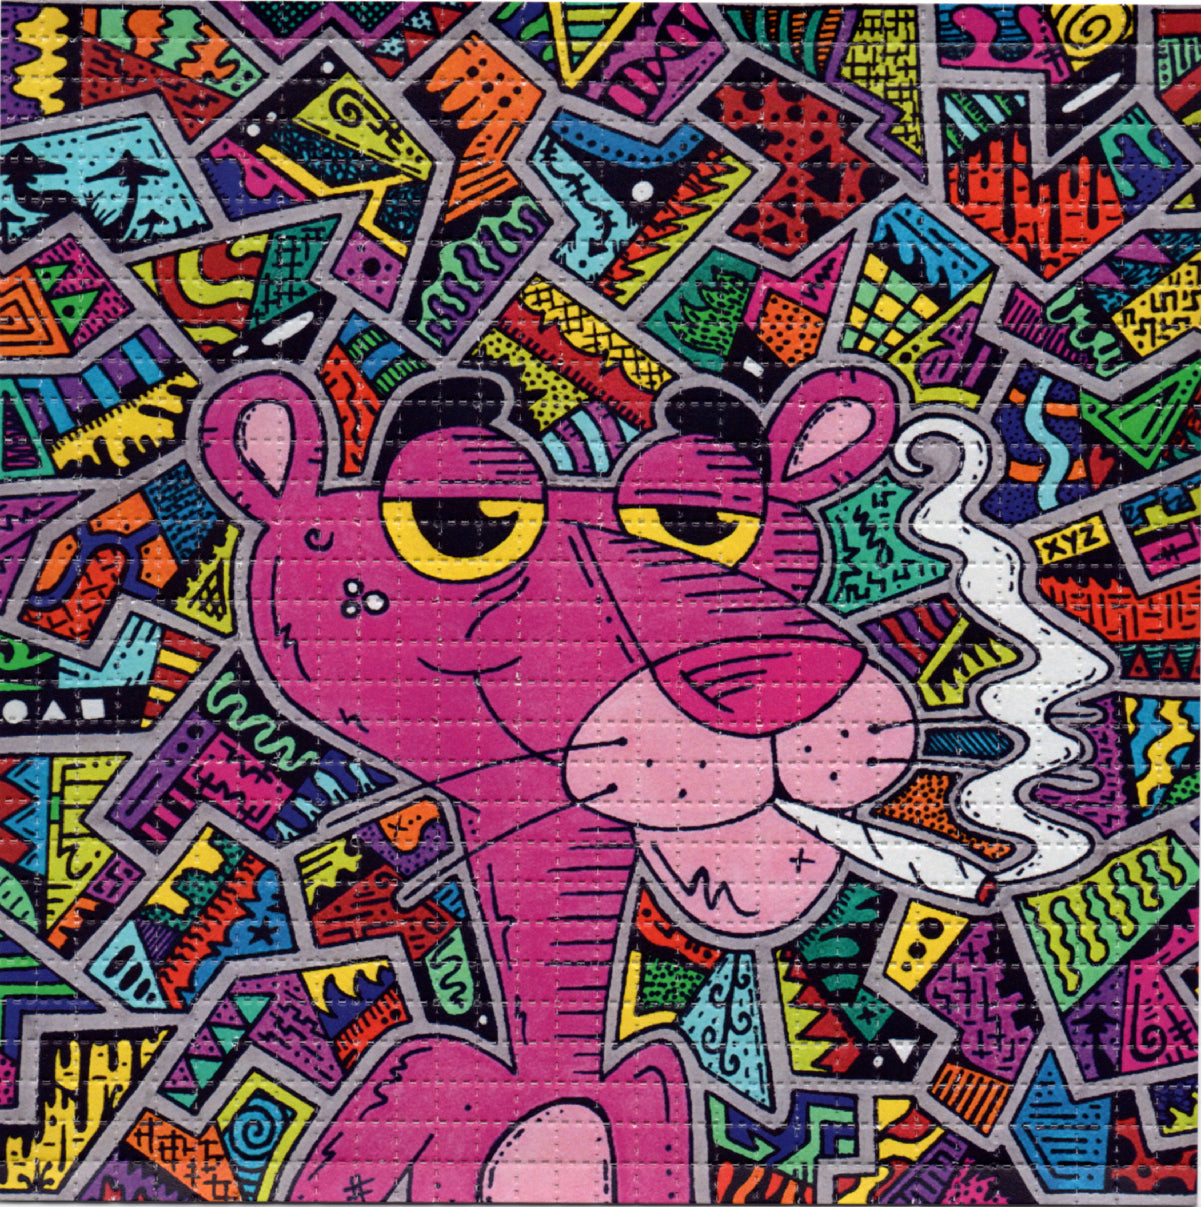 Smoking Panther by Areh LSD blotter art print